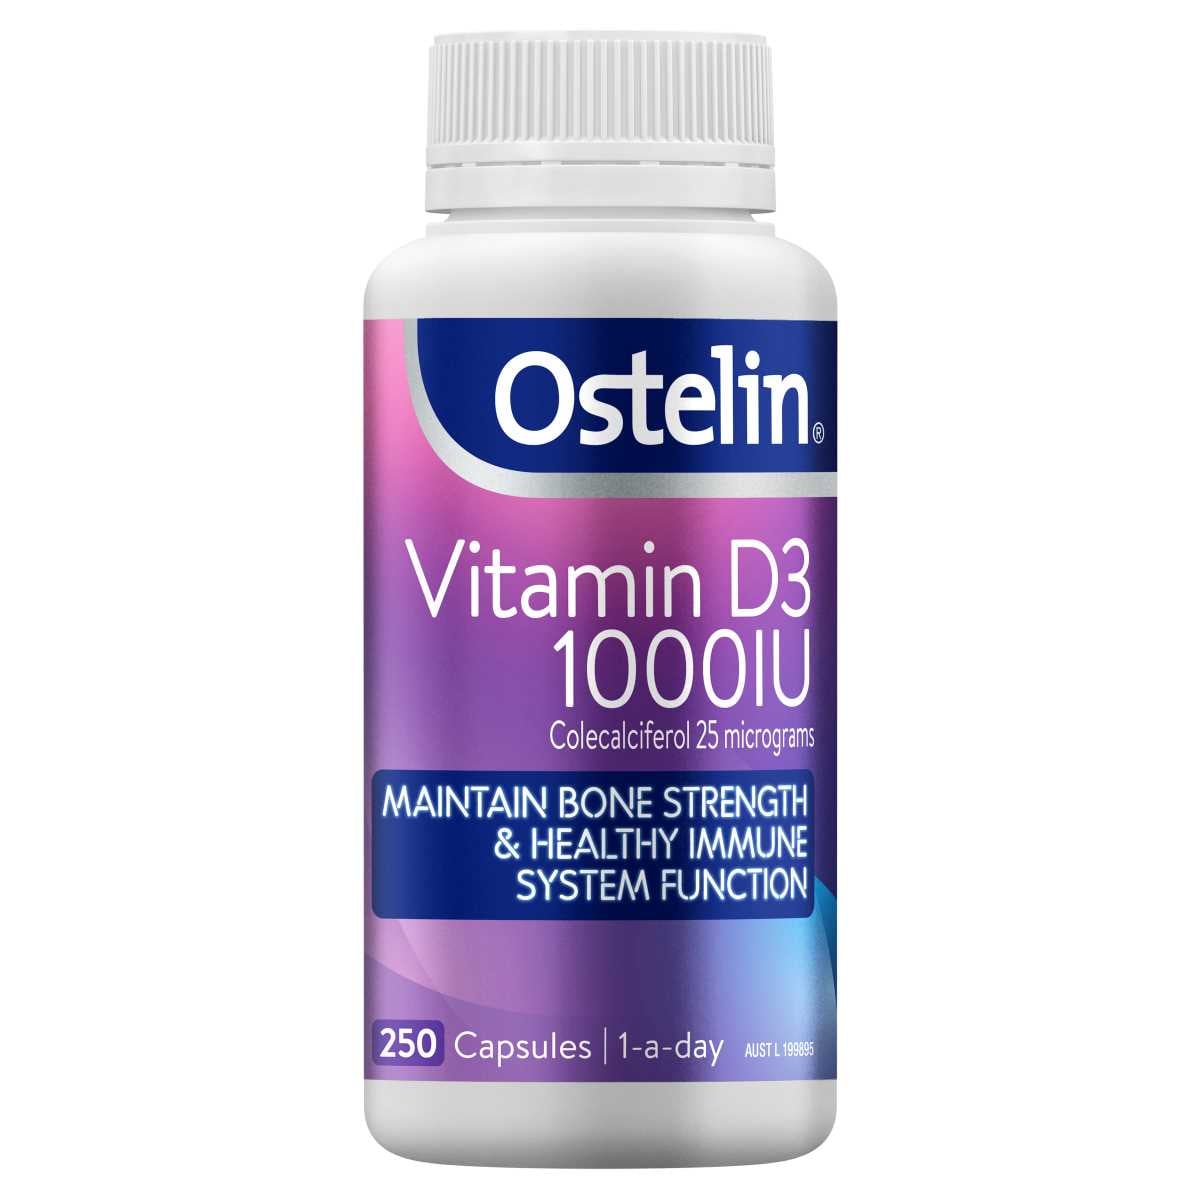 Ostelin Vitamin D 1000iu 250 Capsules Australia